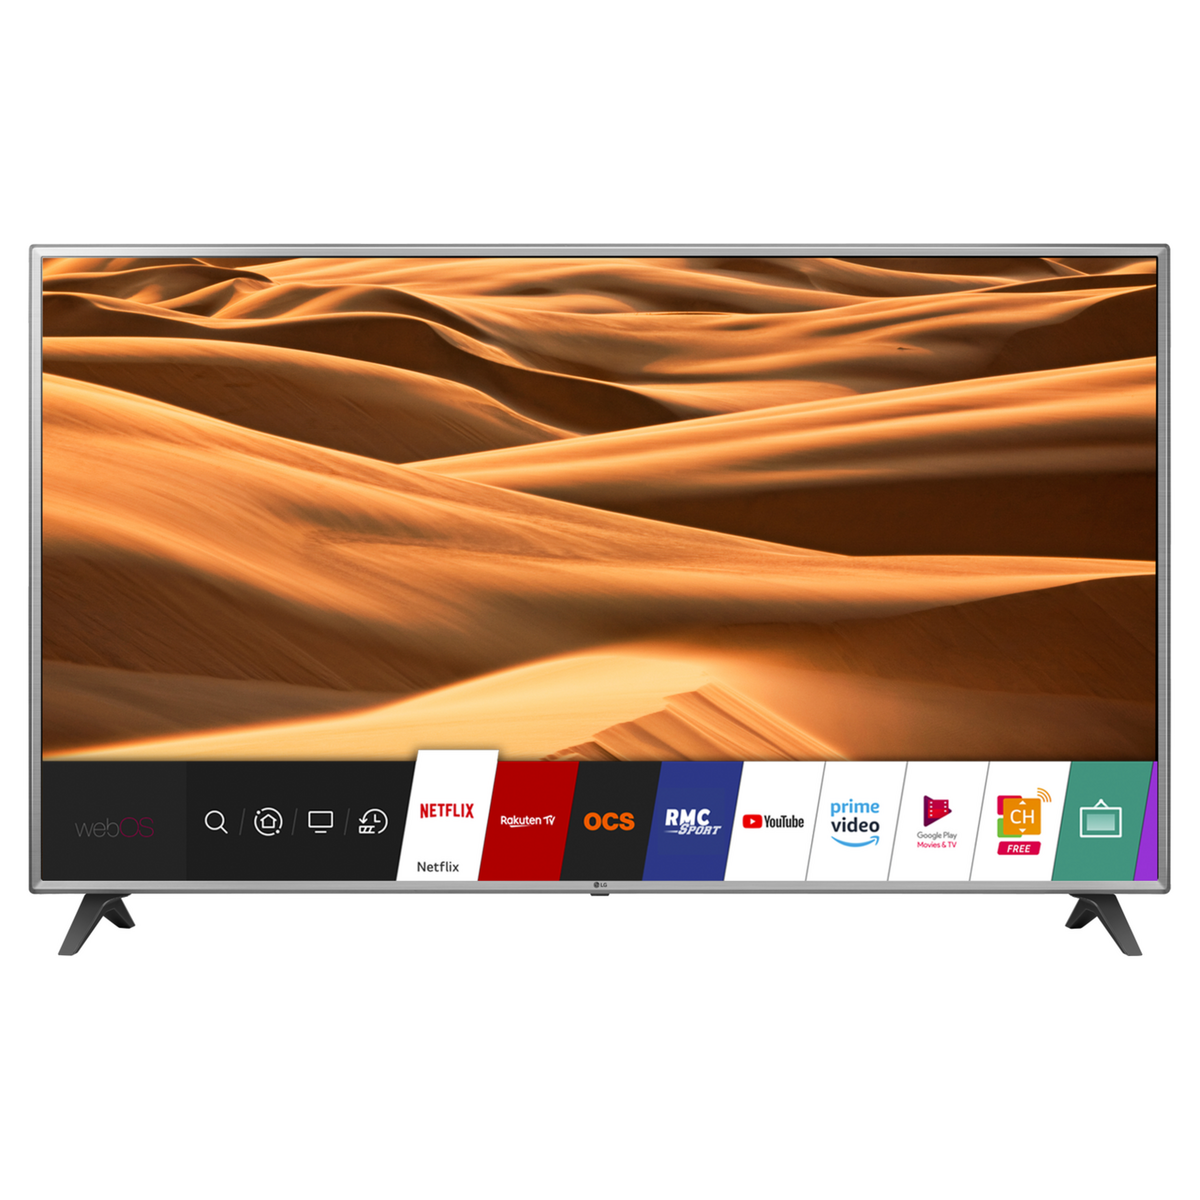 LG 75UM7000 TV LED 4K UHD 189 cm Smart TV